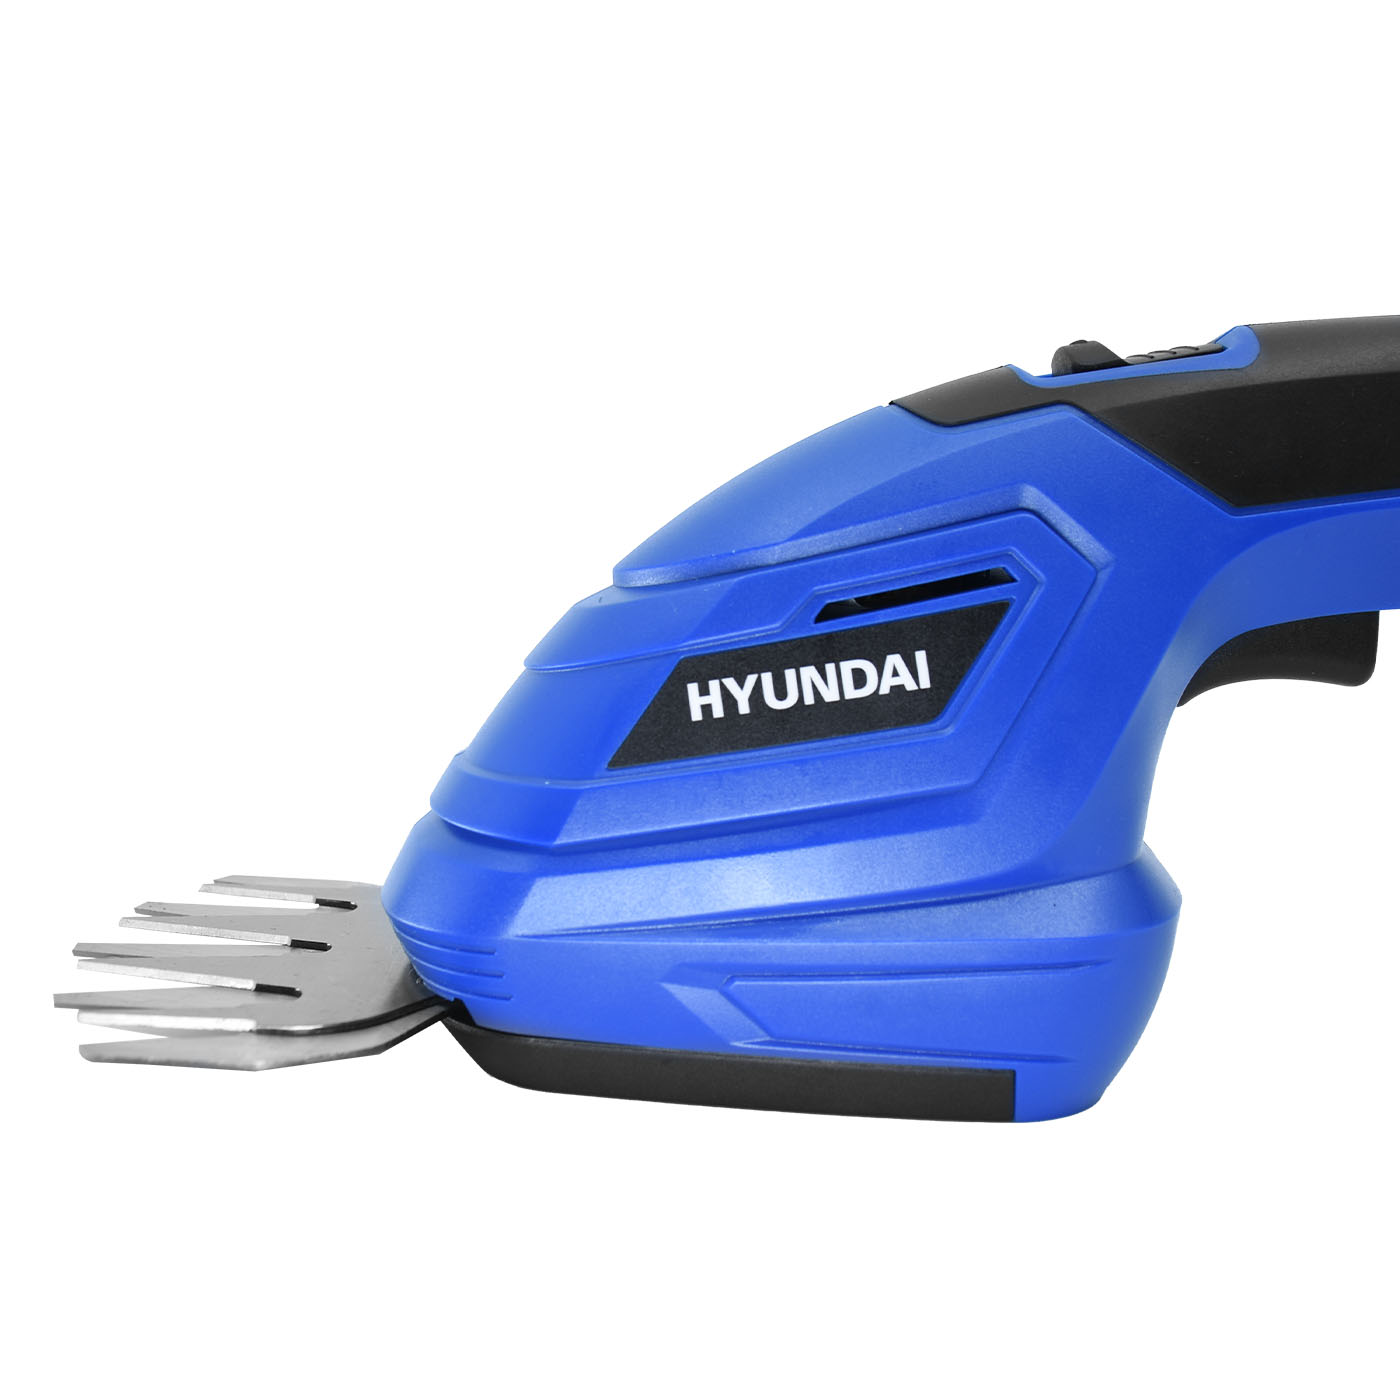 SIERRA SABLE DE BATERIA HYUNDAI 20V - HYRS20 - Hyundai Power